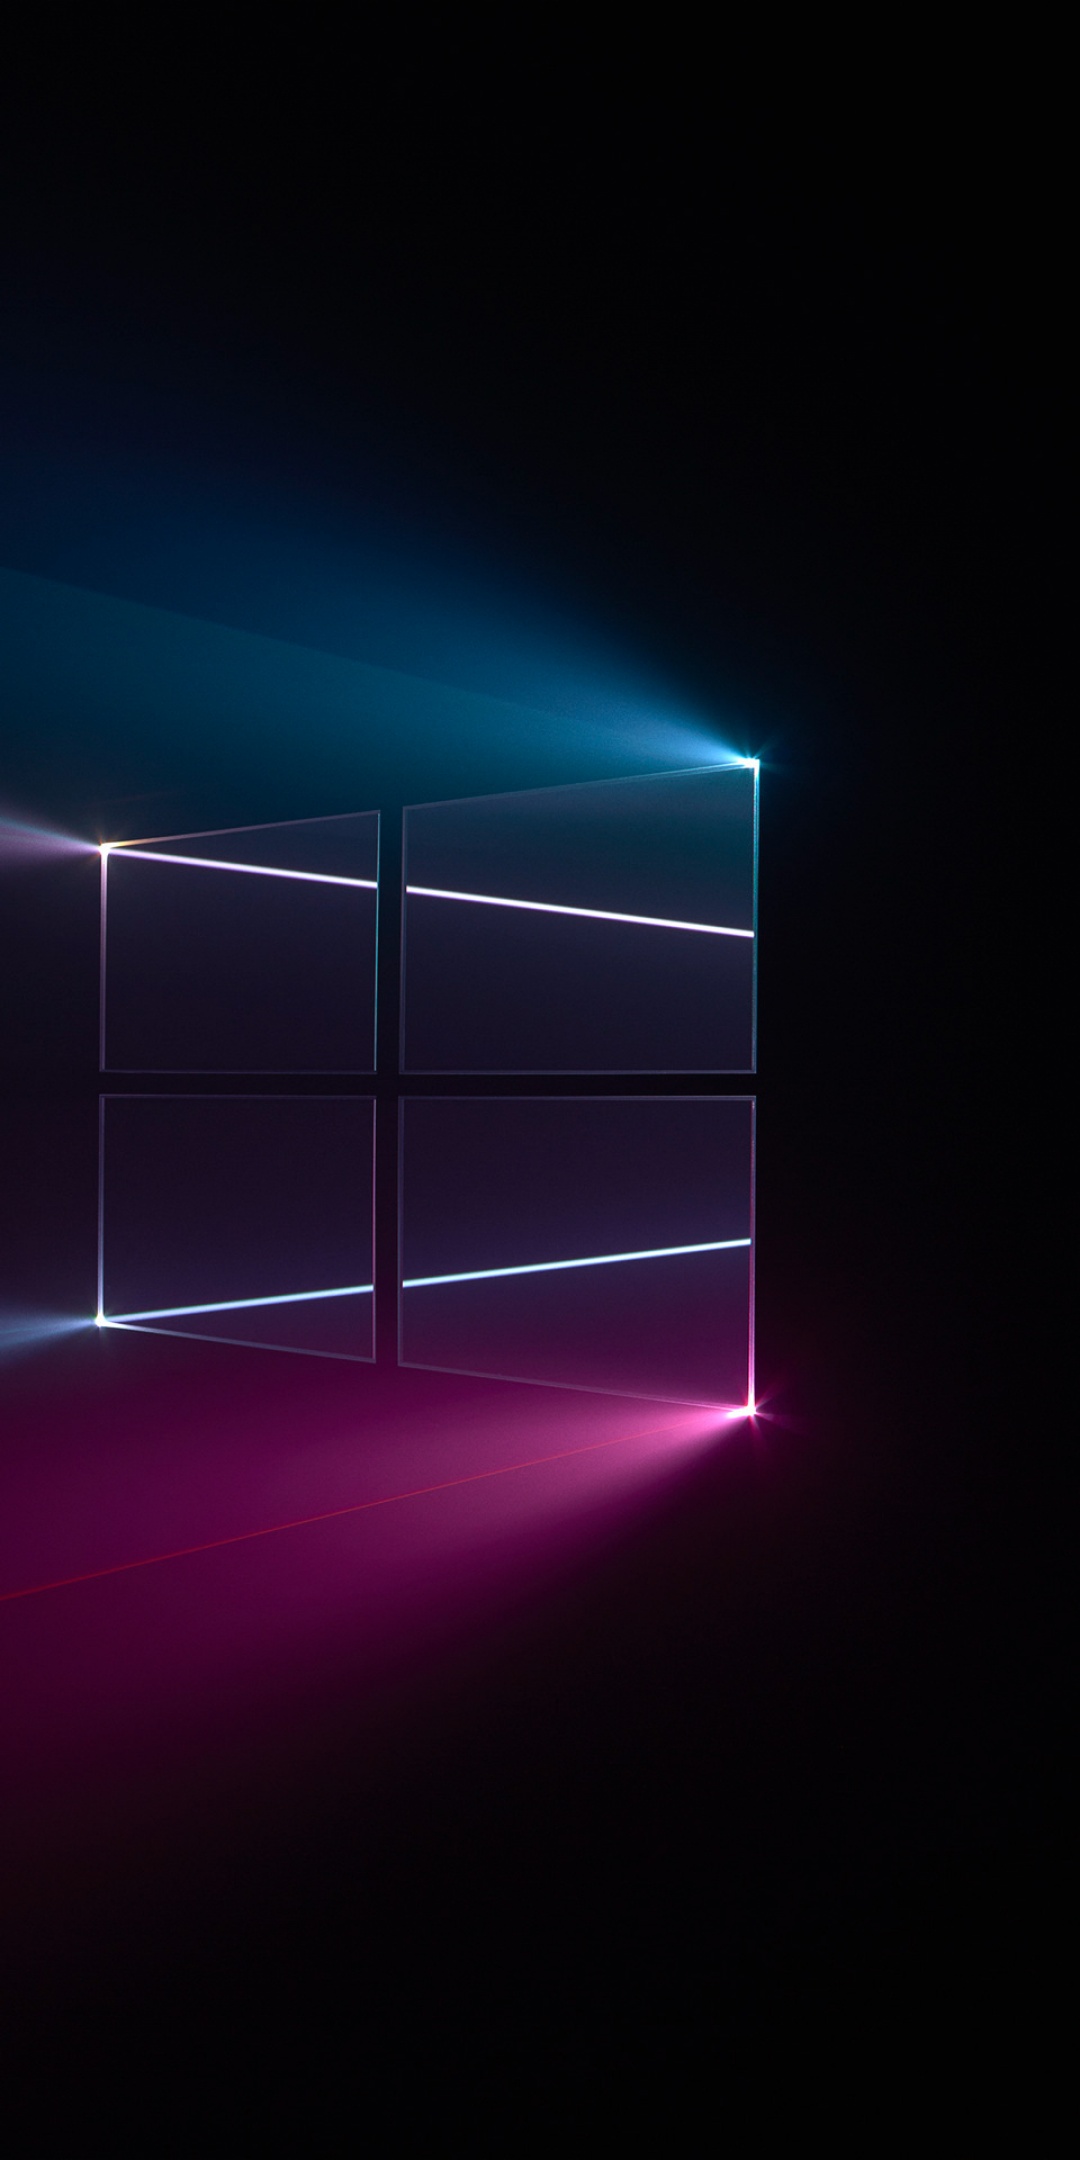 Windows 10 4K Wallpaper, Microsoft Windows, Colorful